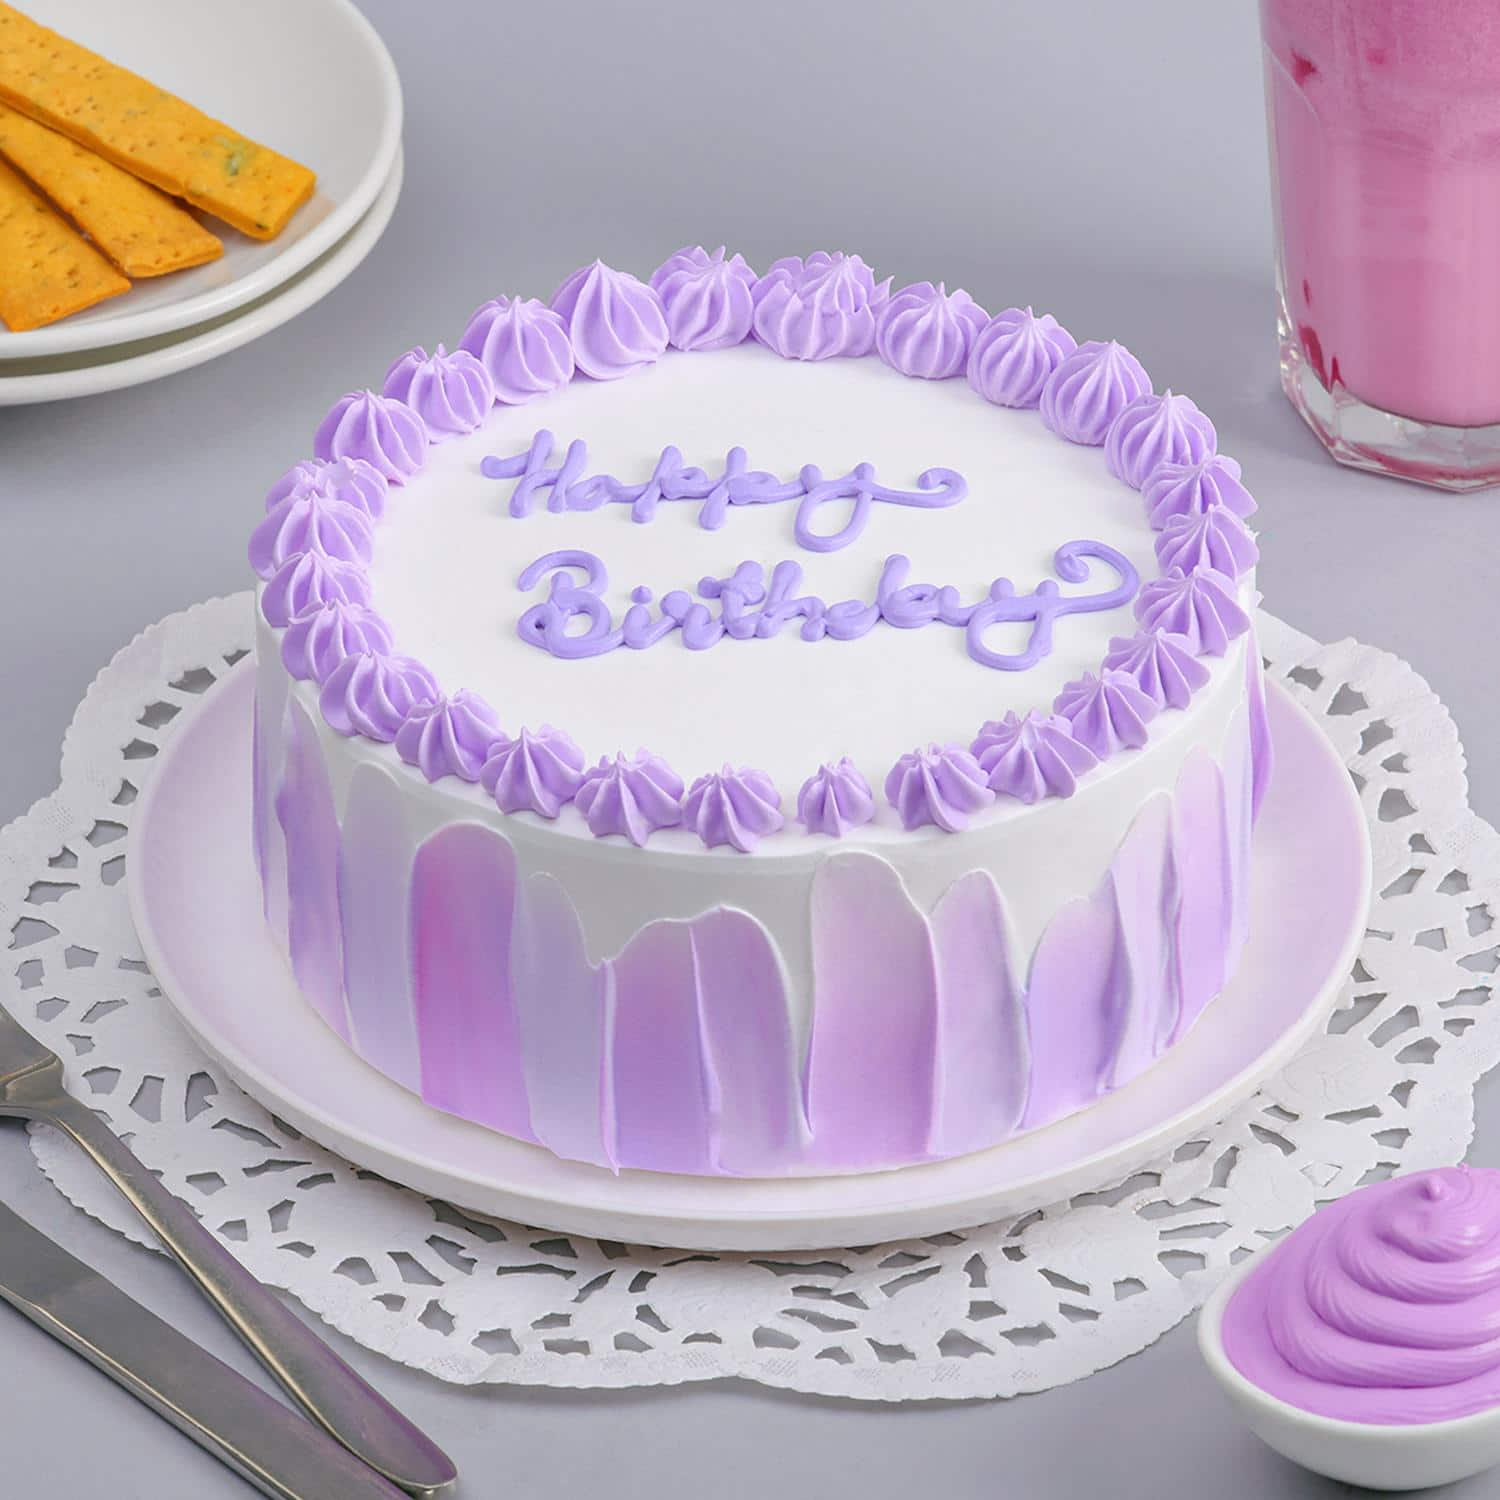 Design & Build Your Own Birthday Cake - Birhday Cake Shop